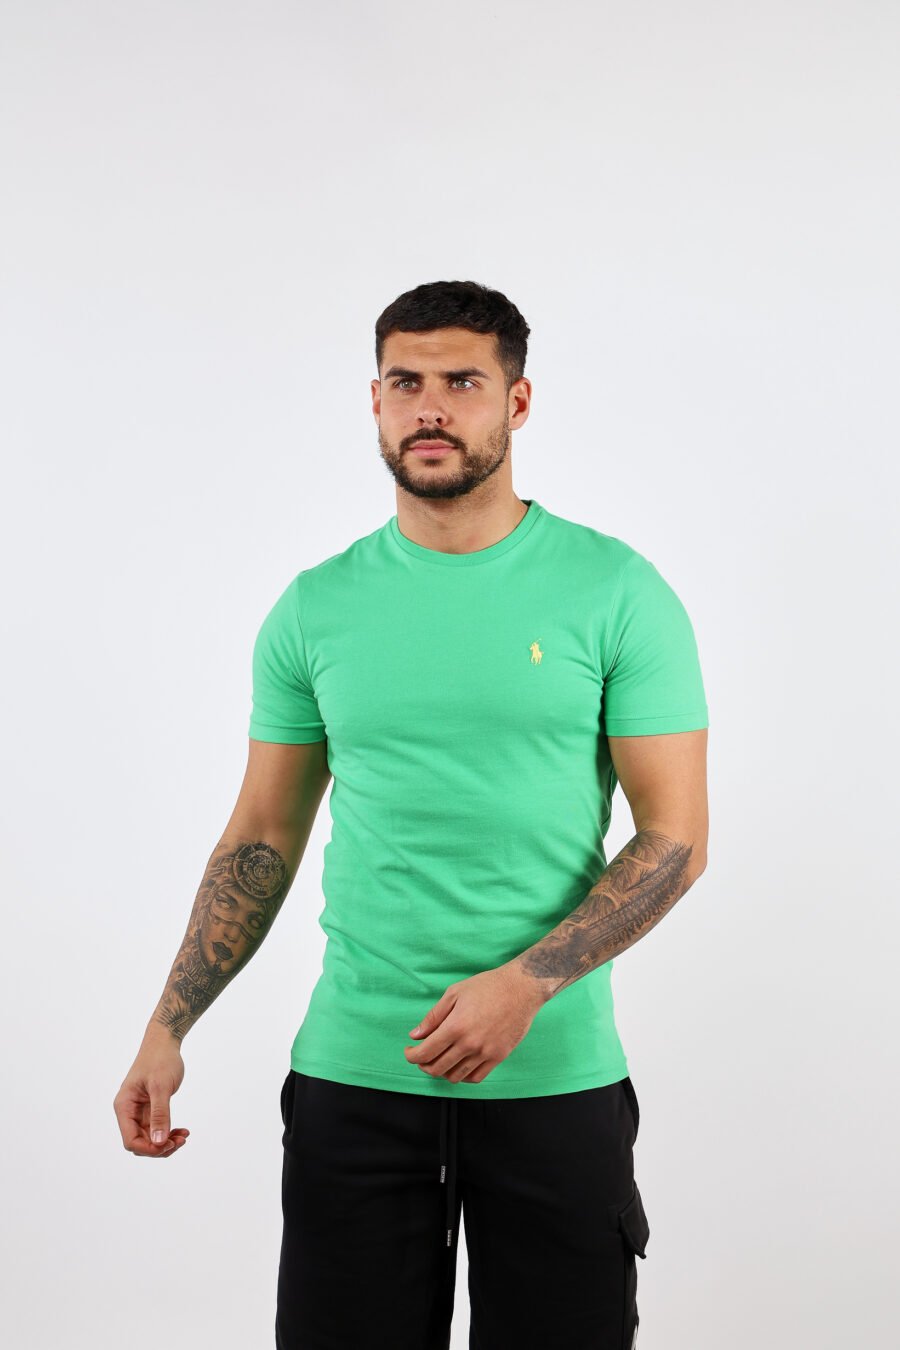 Grünes und gelbes T-Shirt mit Mini-Logo "Polo" - BLS Fashion 301